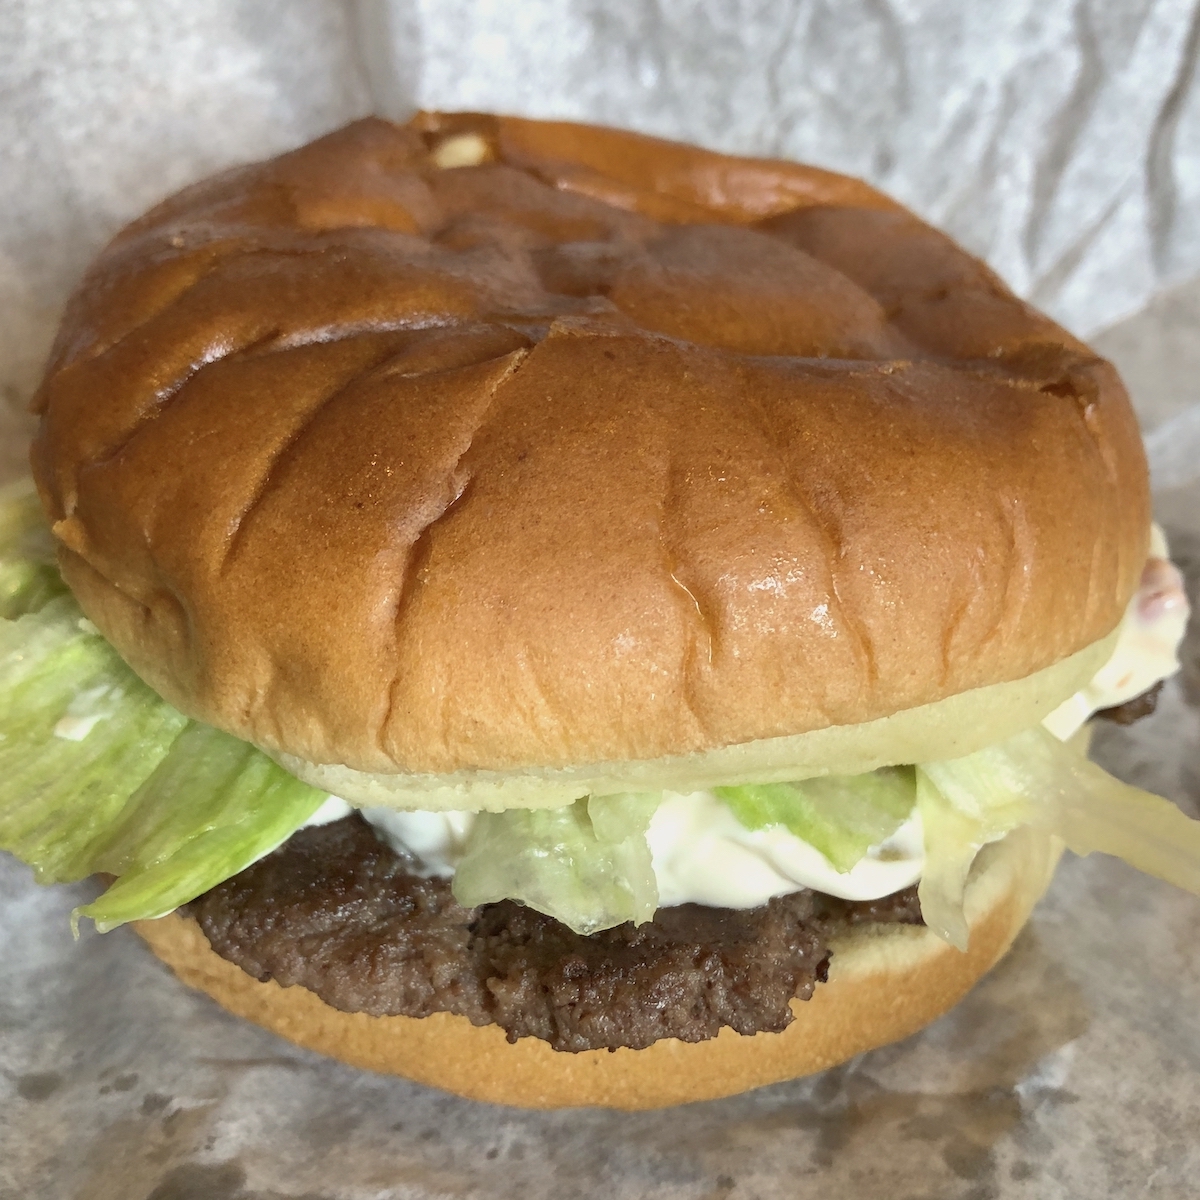 Olive Burger from Weston's Kewpee Sandwich Shop in Lansing, Michigan